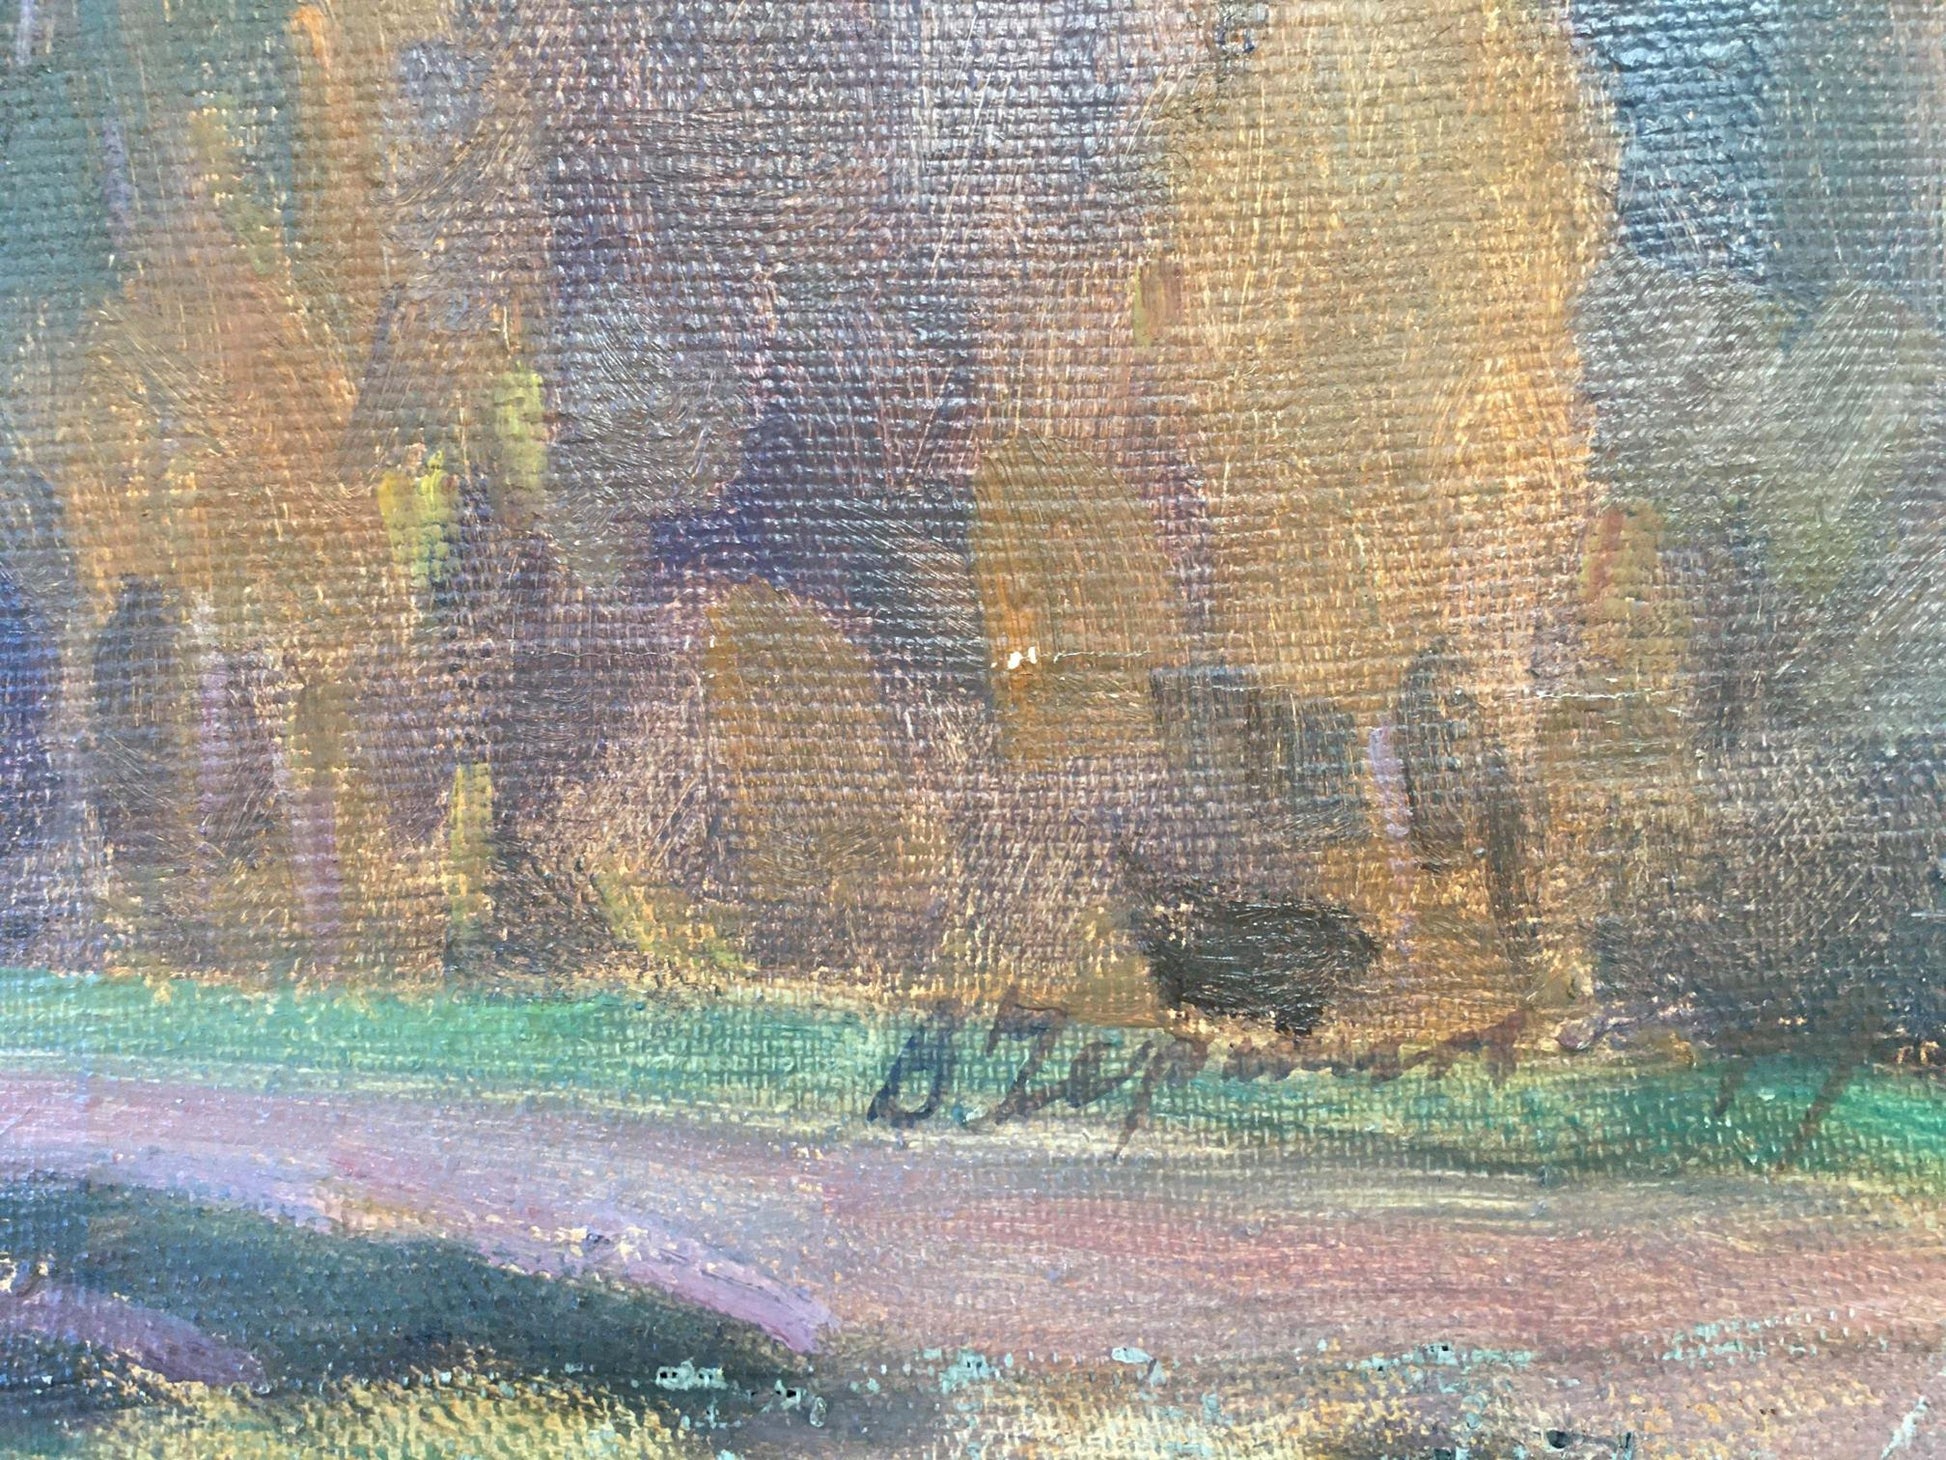 The mountain landscape in Chernikov Vladimir Mikhailovich's painting is rendered in oils